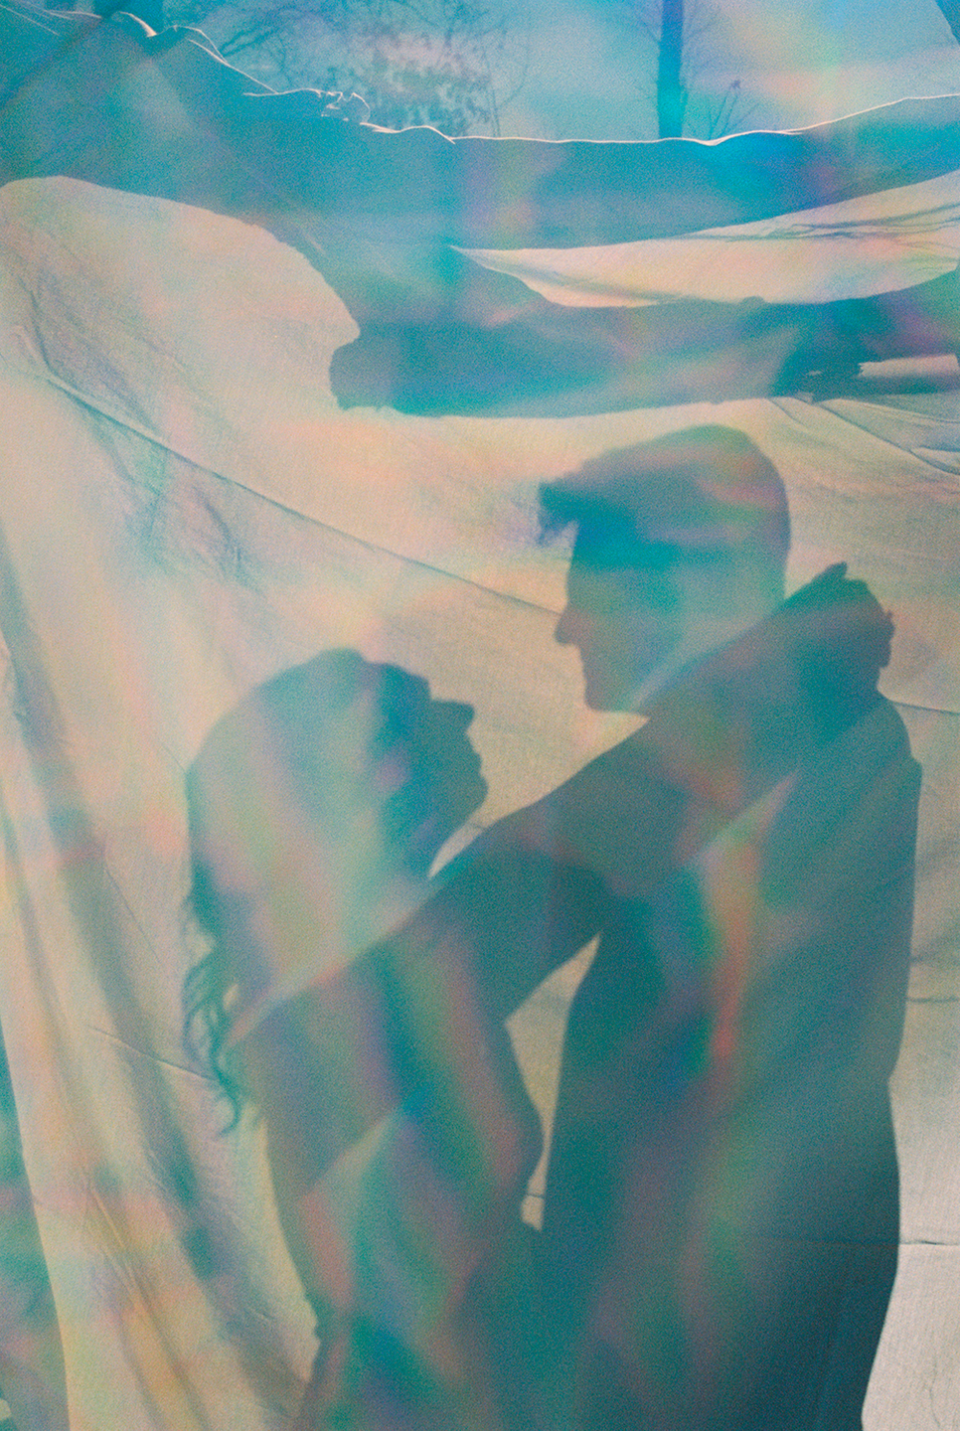 shadows of man and woman embracing